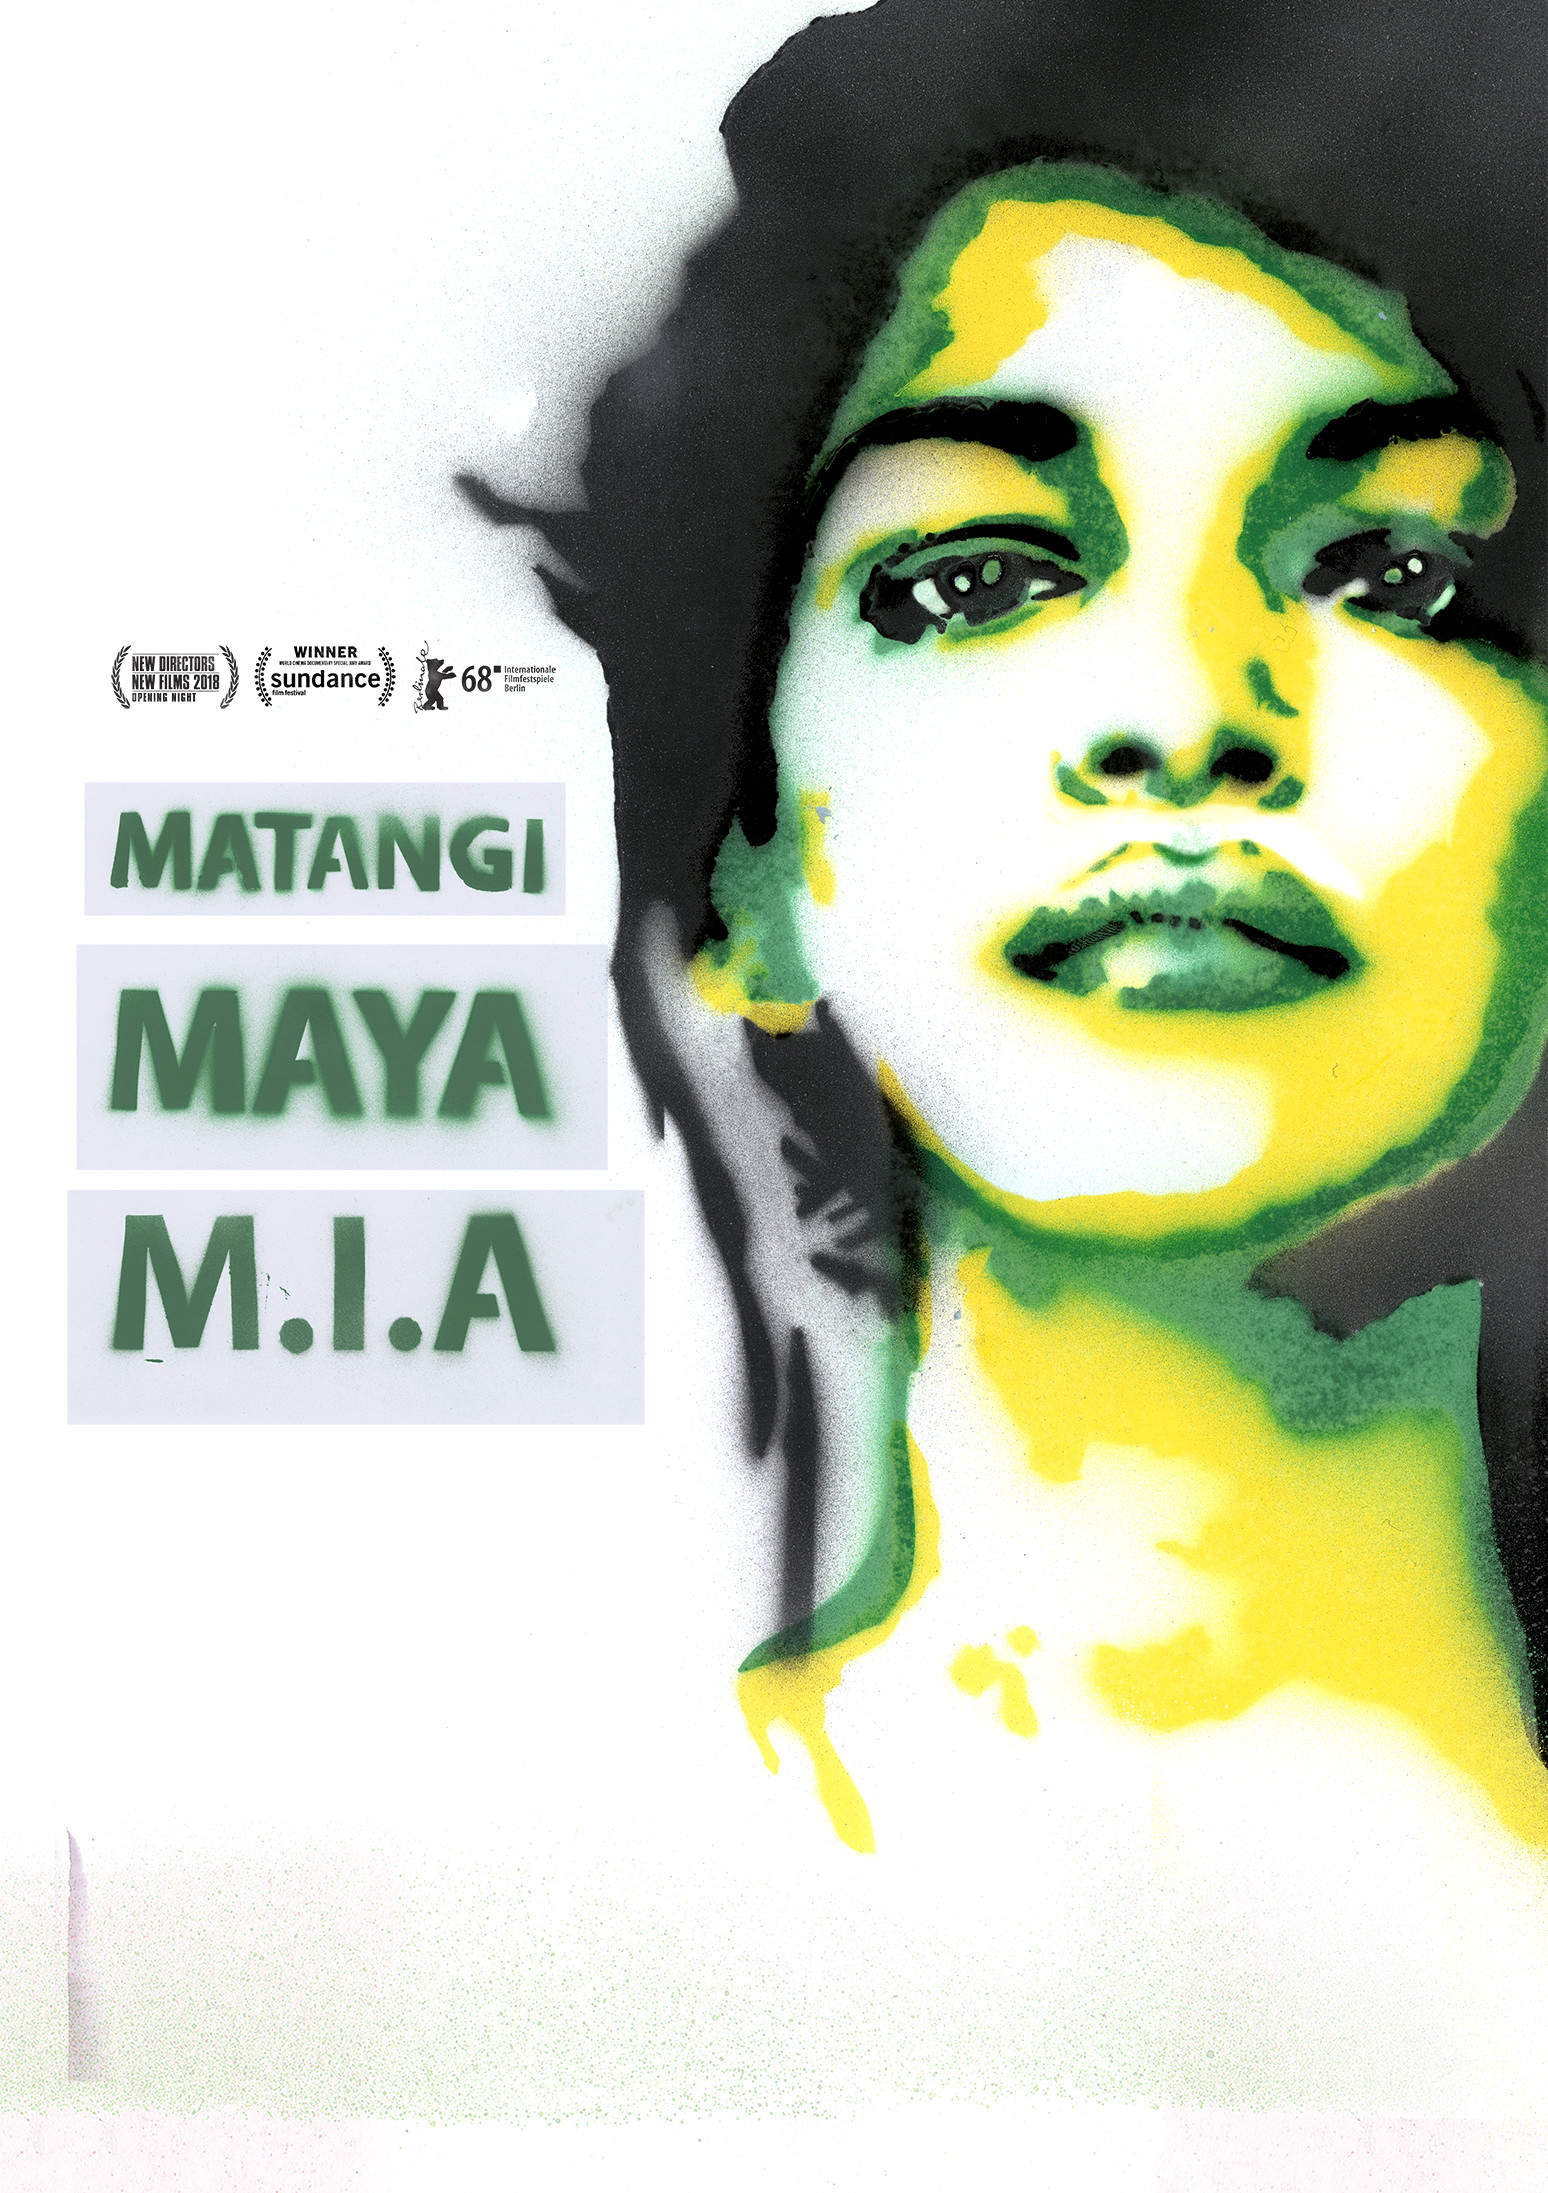 Matangi Maya M.I.A